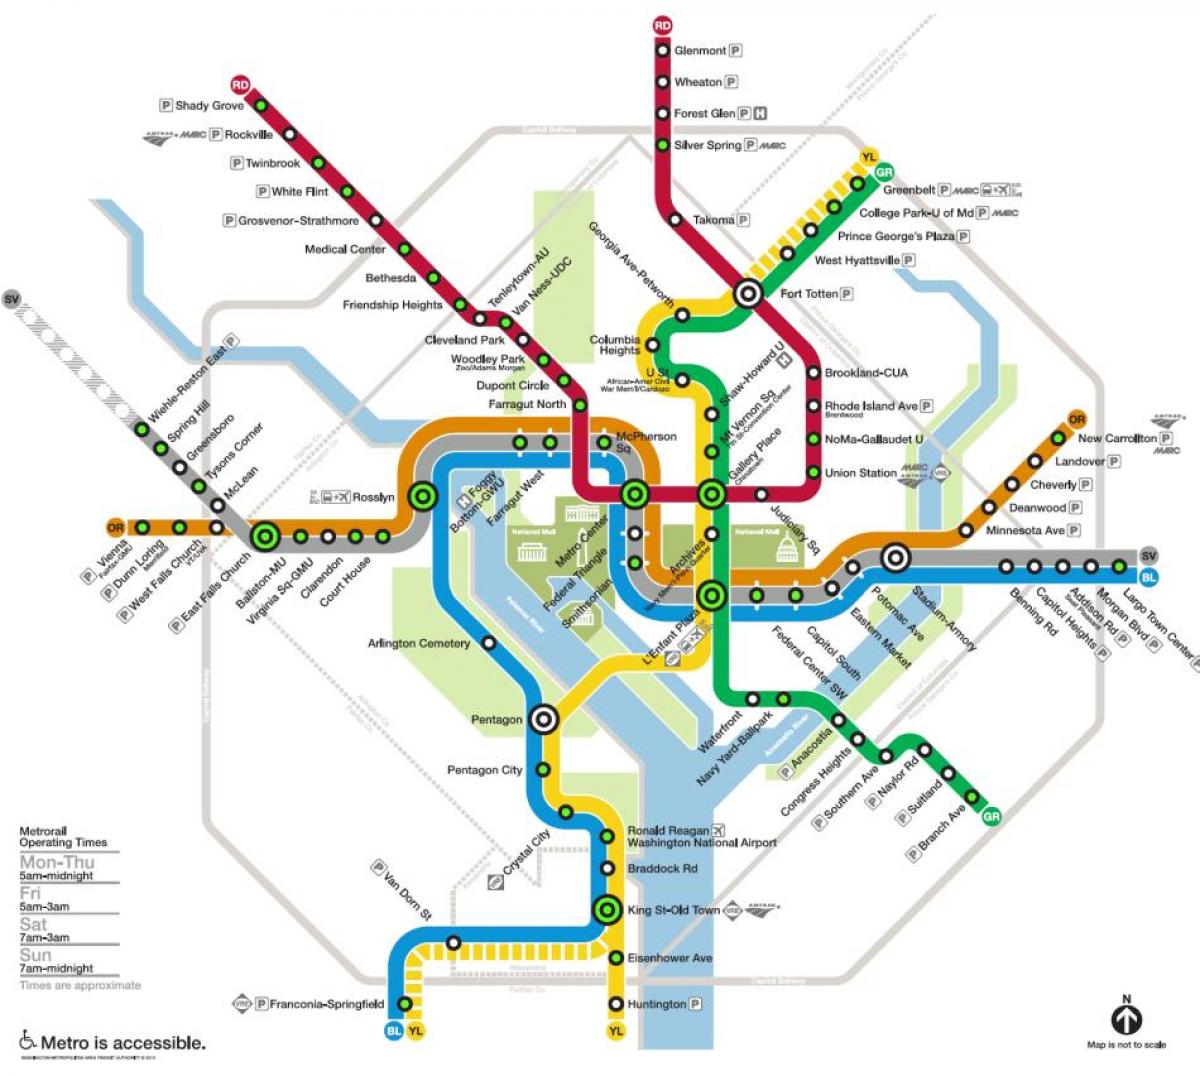 l'estació de metro de washington mapa